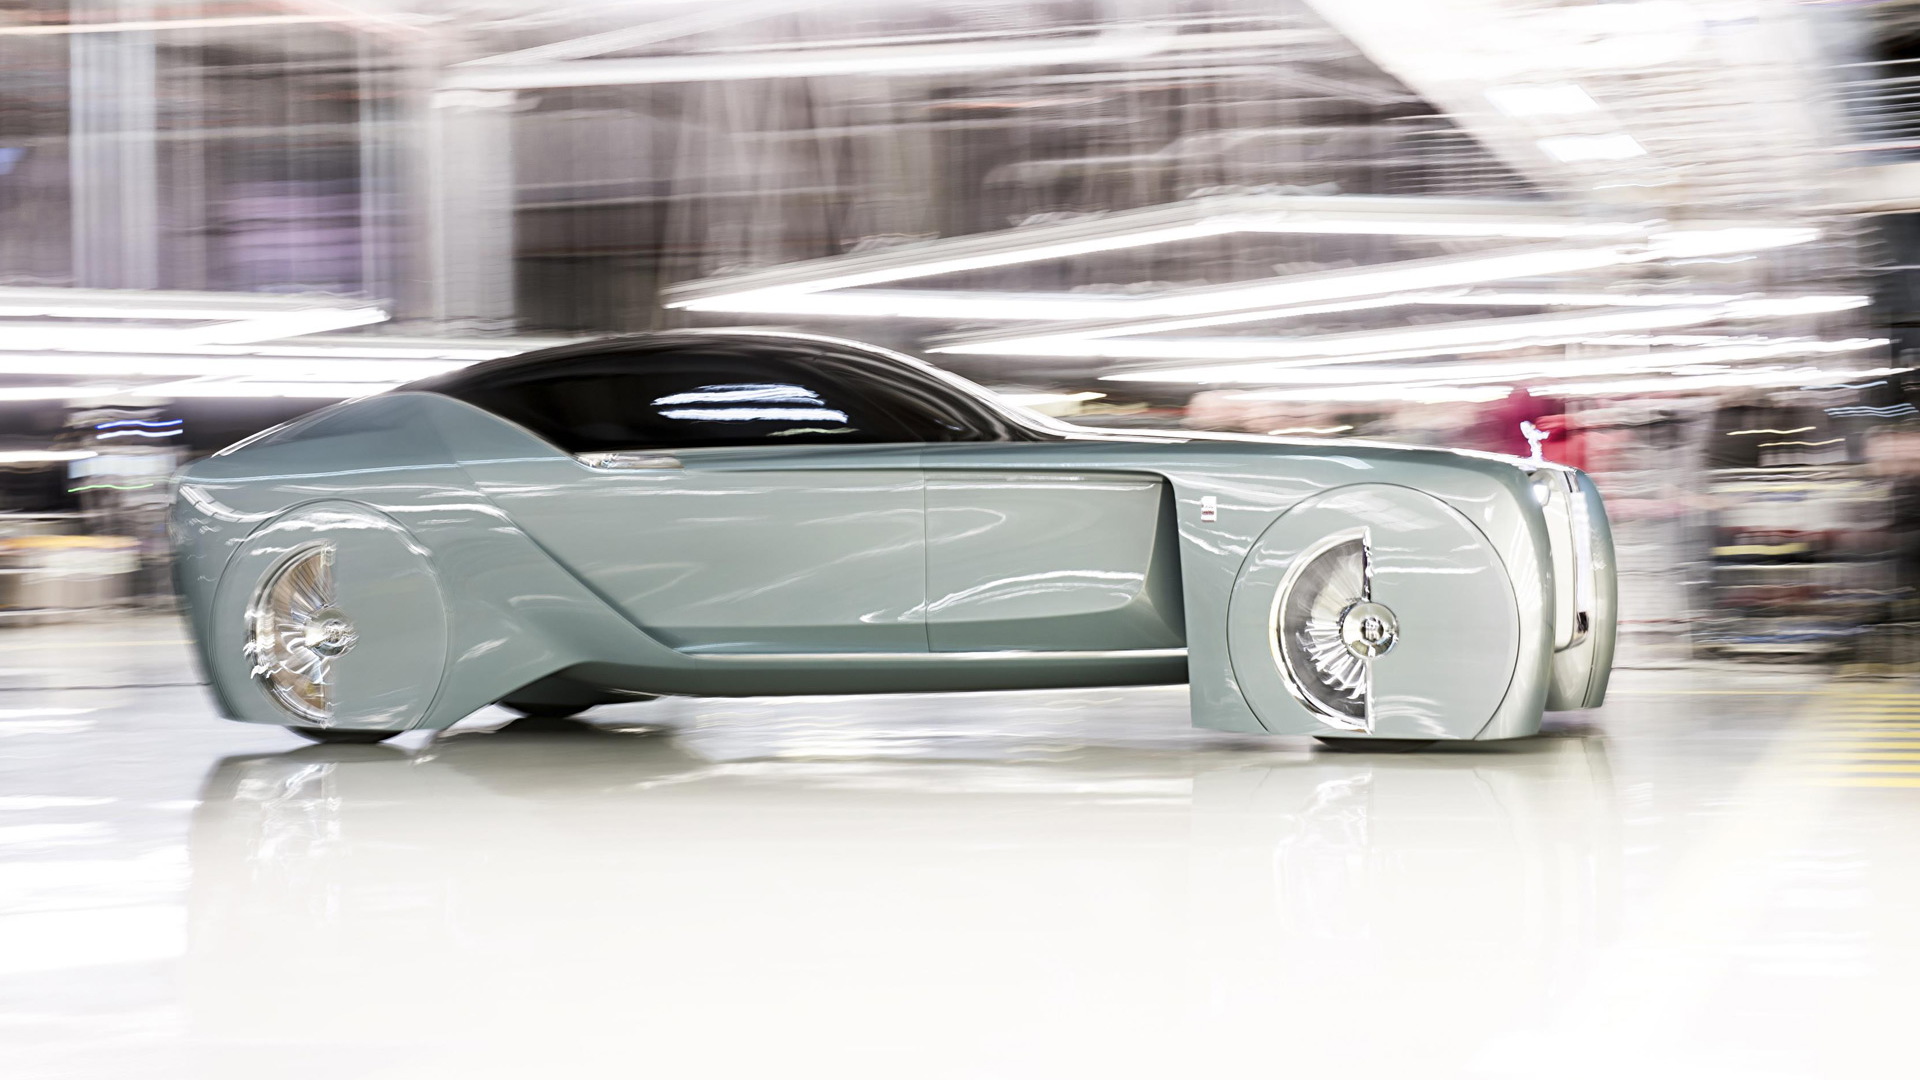 Rolls-Royce Vision Next 100 (103EX) concept